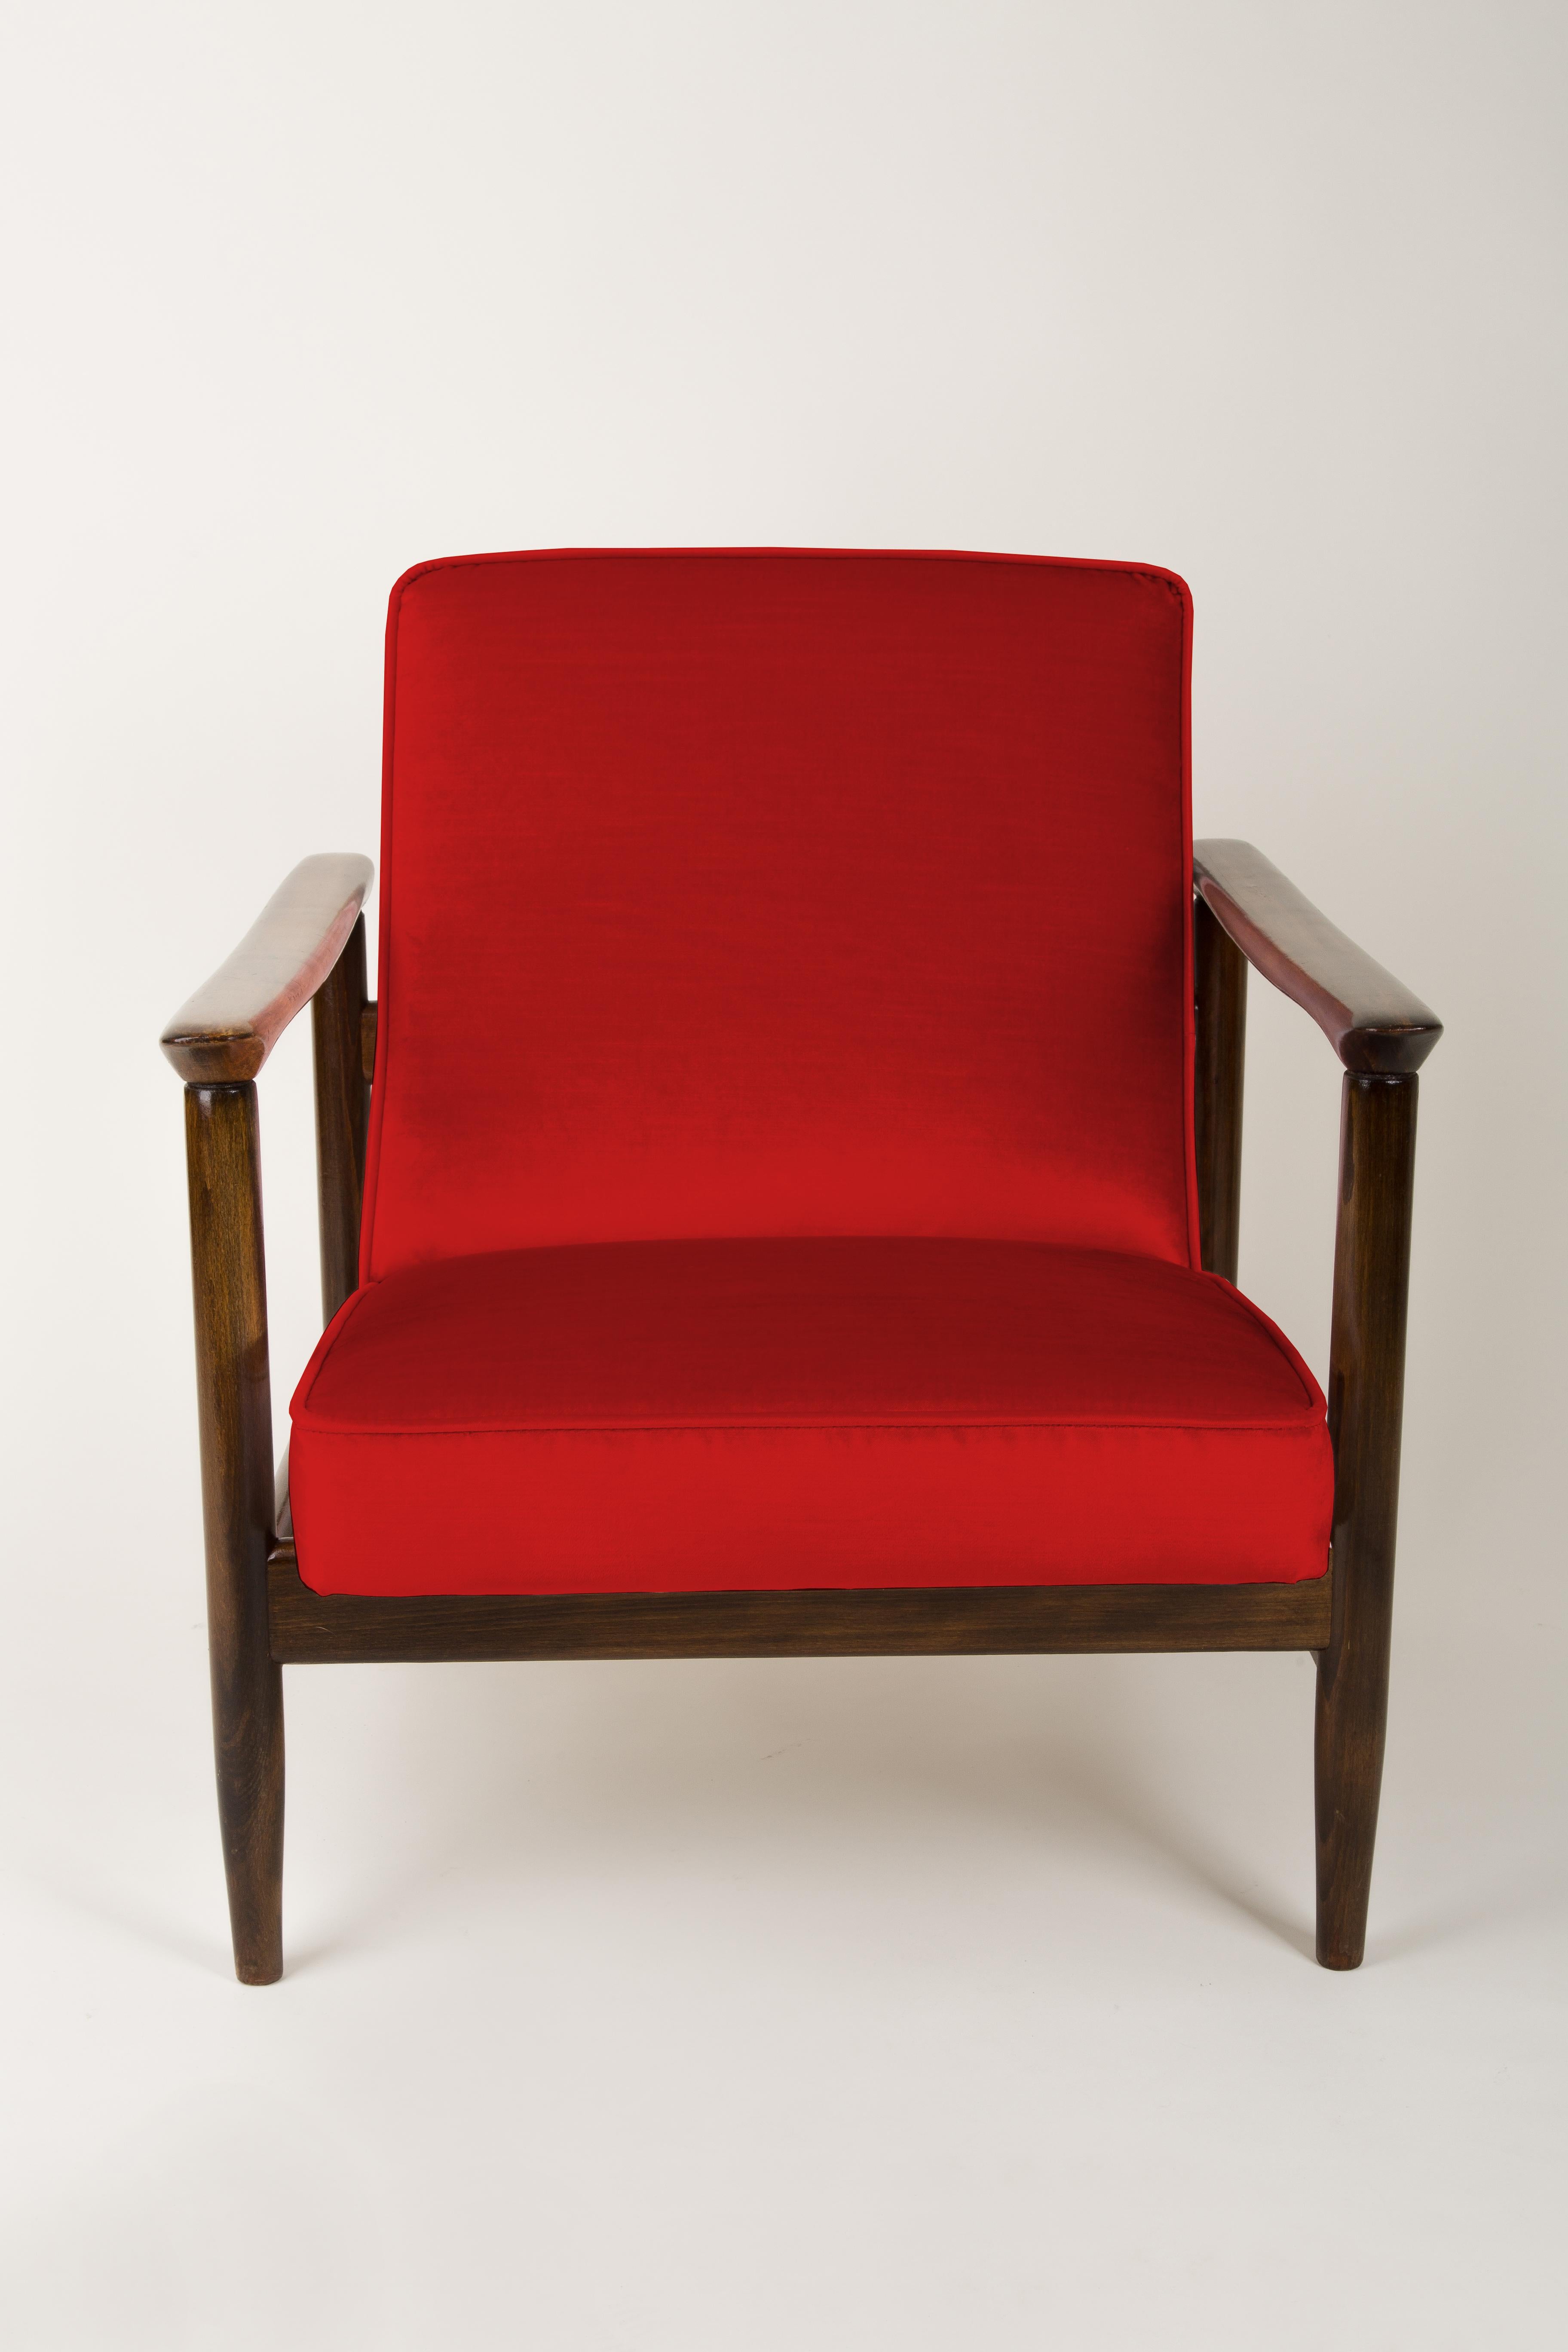 Roter Sessel, Edmund Homa, GFM-142, 1960er Jahre, Polen (Polnisch) im Angebot